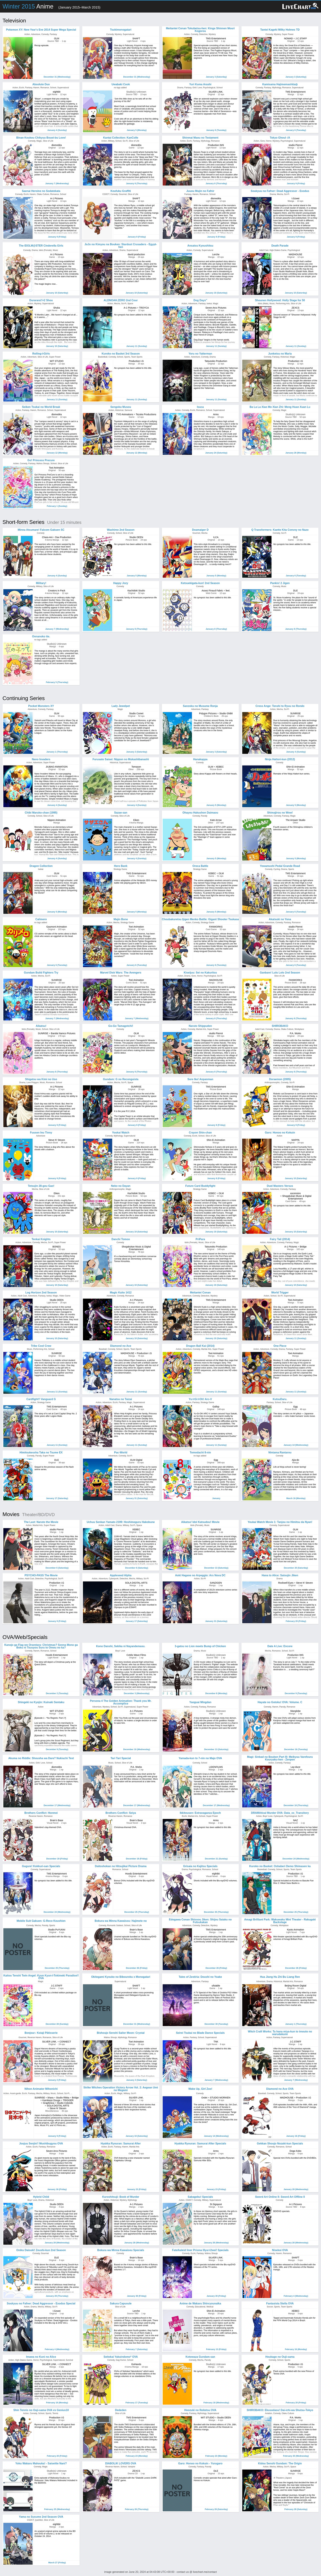 2015 Anime, Seasonal Chart